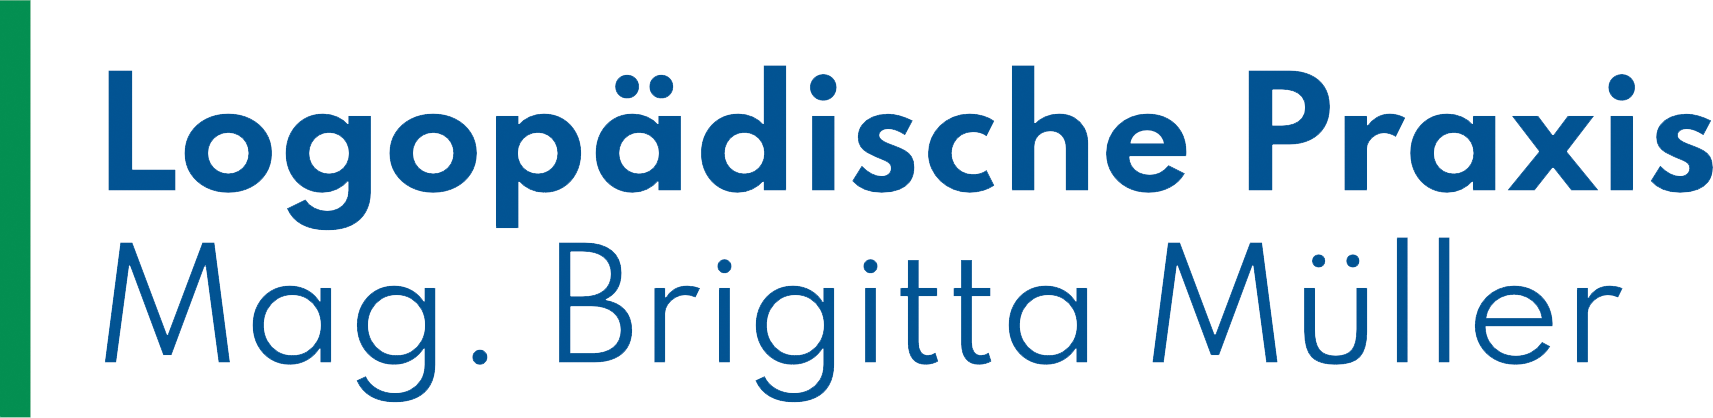 Logopädische Praxis Mag. Brigitta Müller